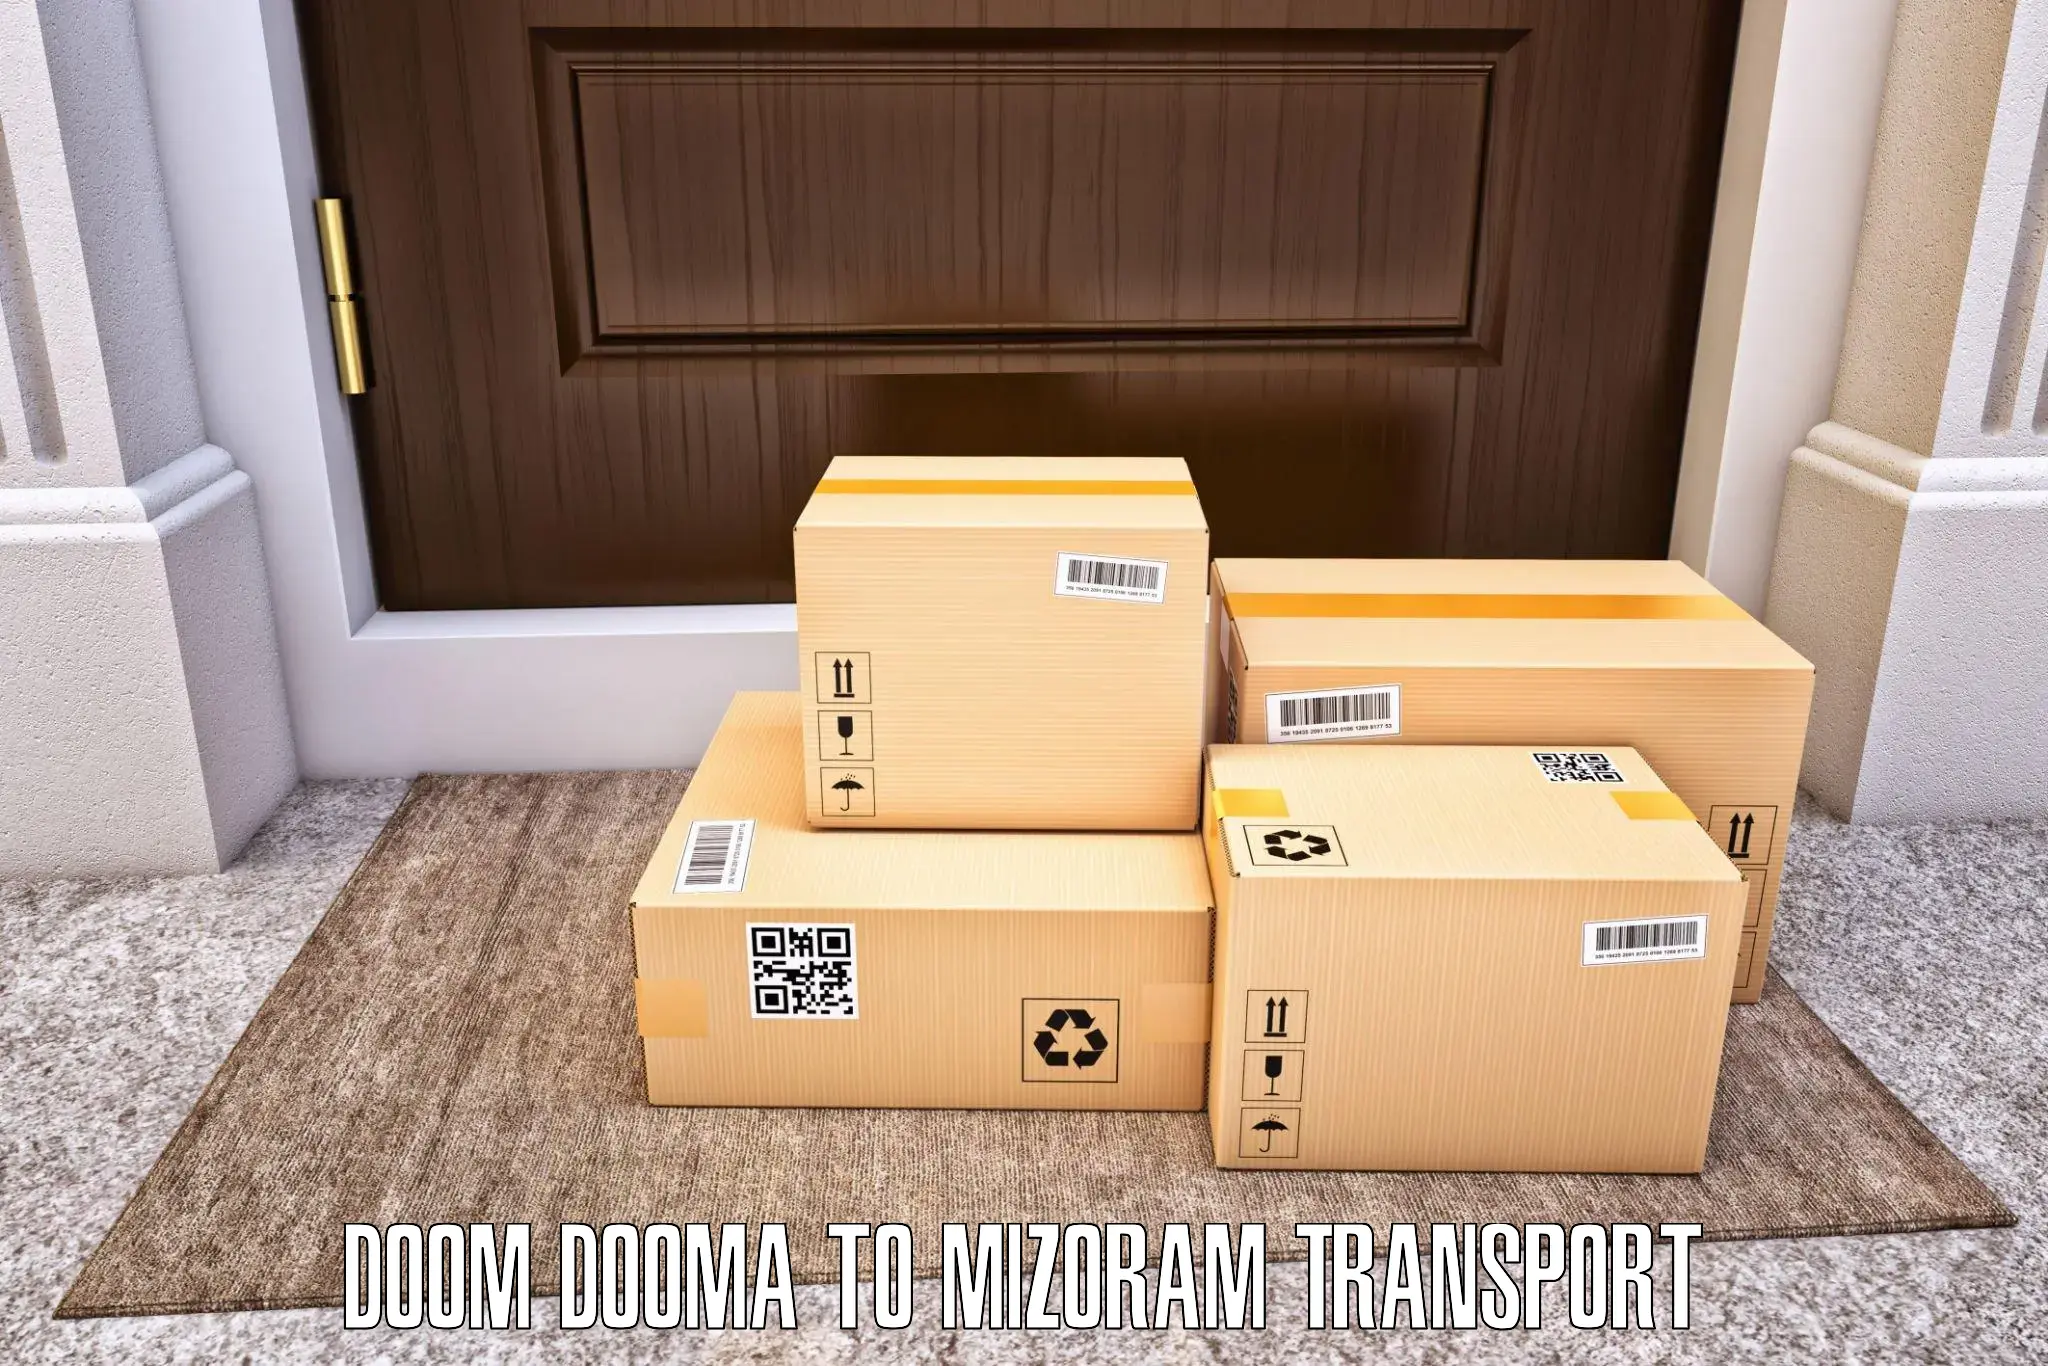 Cycle transportation service Doom Dooma to Mizoram